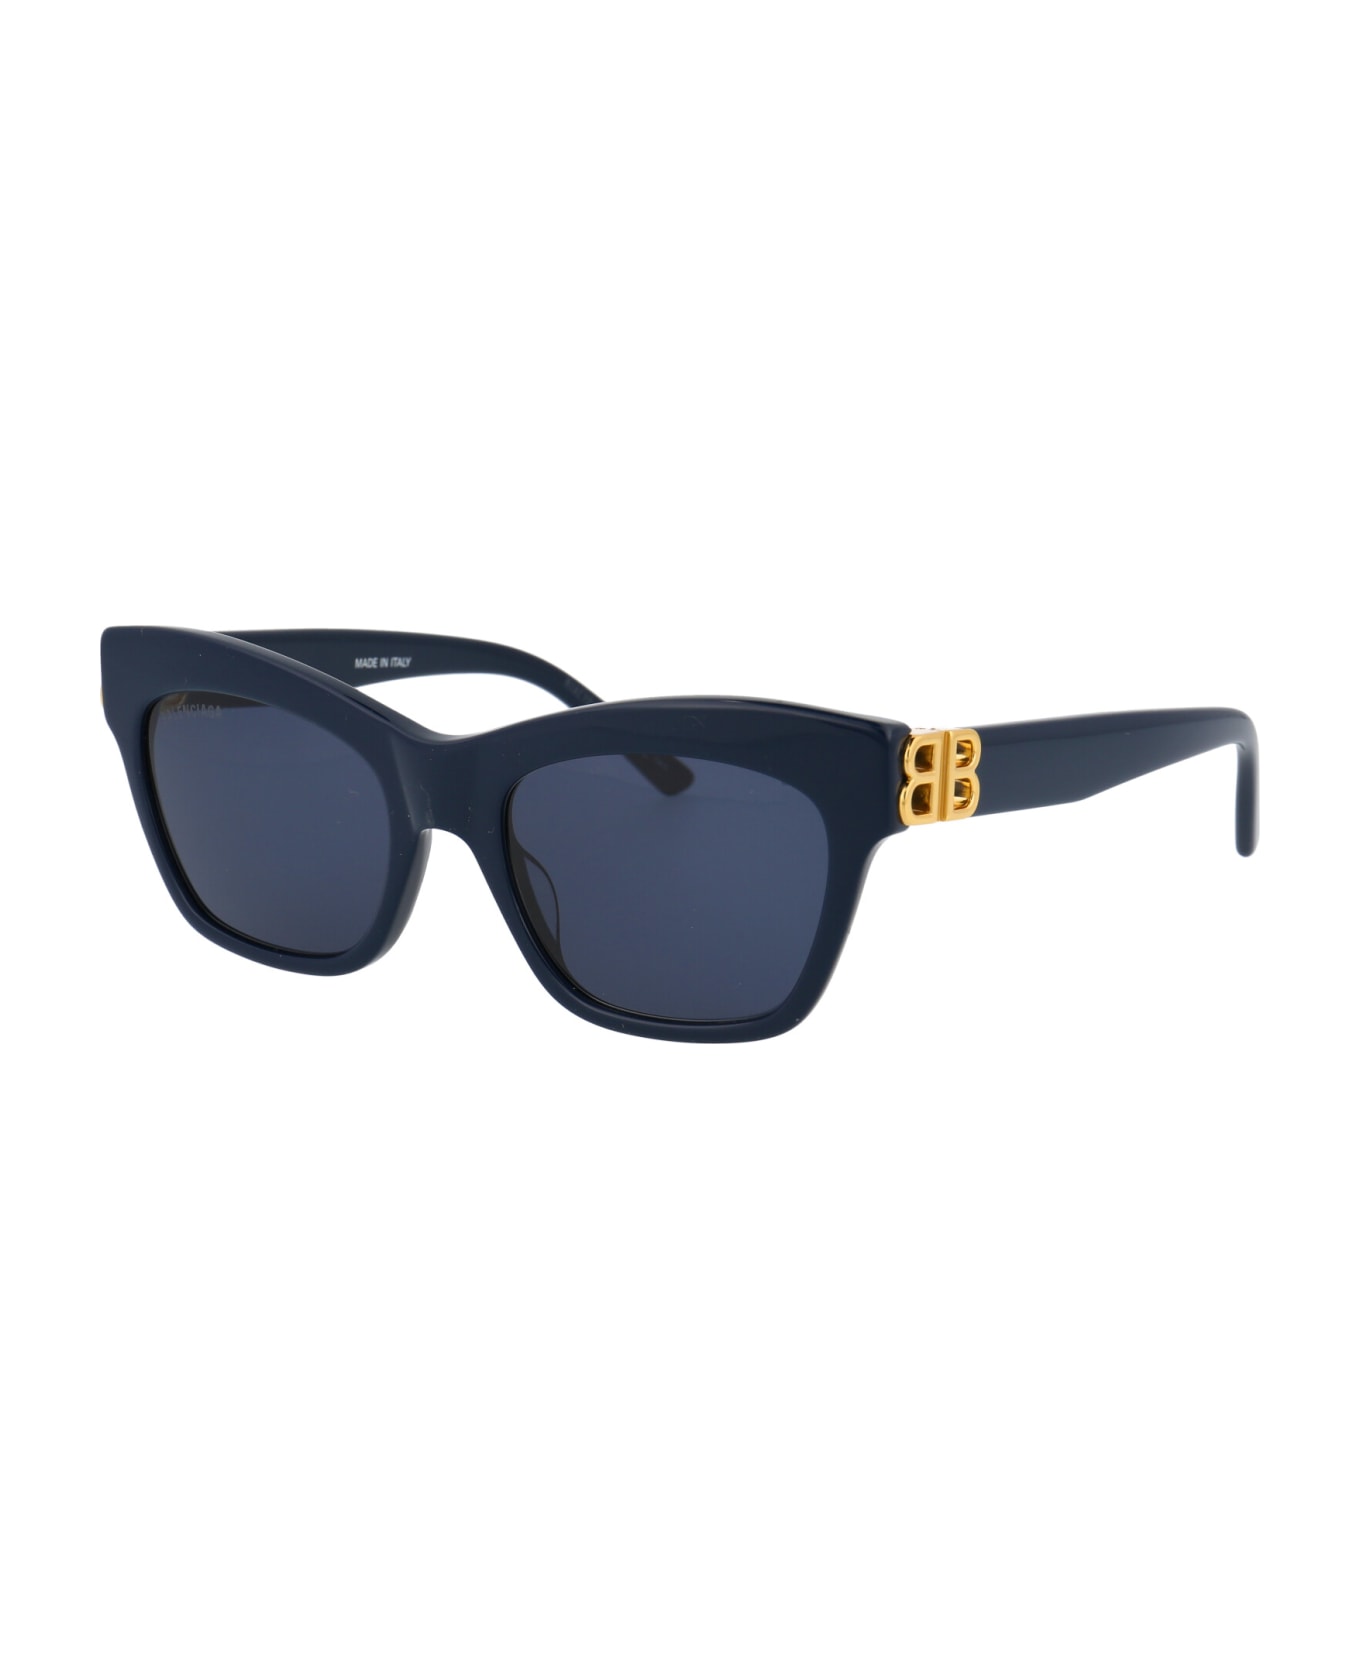 Balenciaga Eyewear Bb0132s Sunglasses - 007 BLUE GOLD BLUE